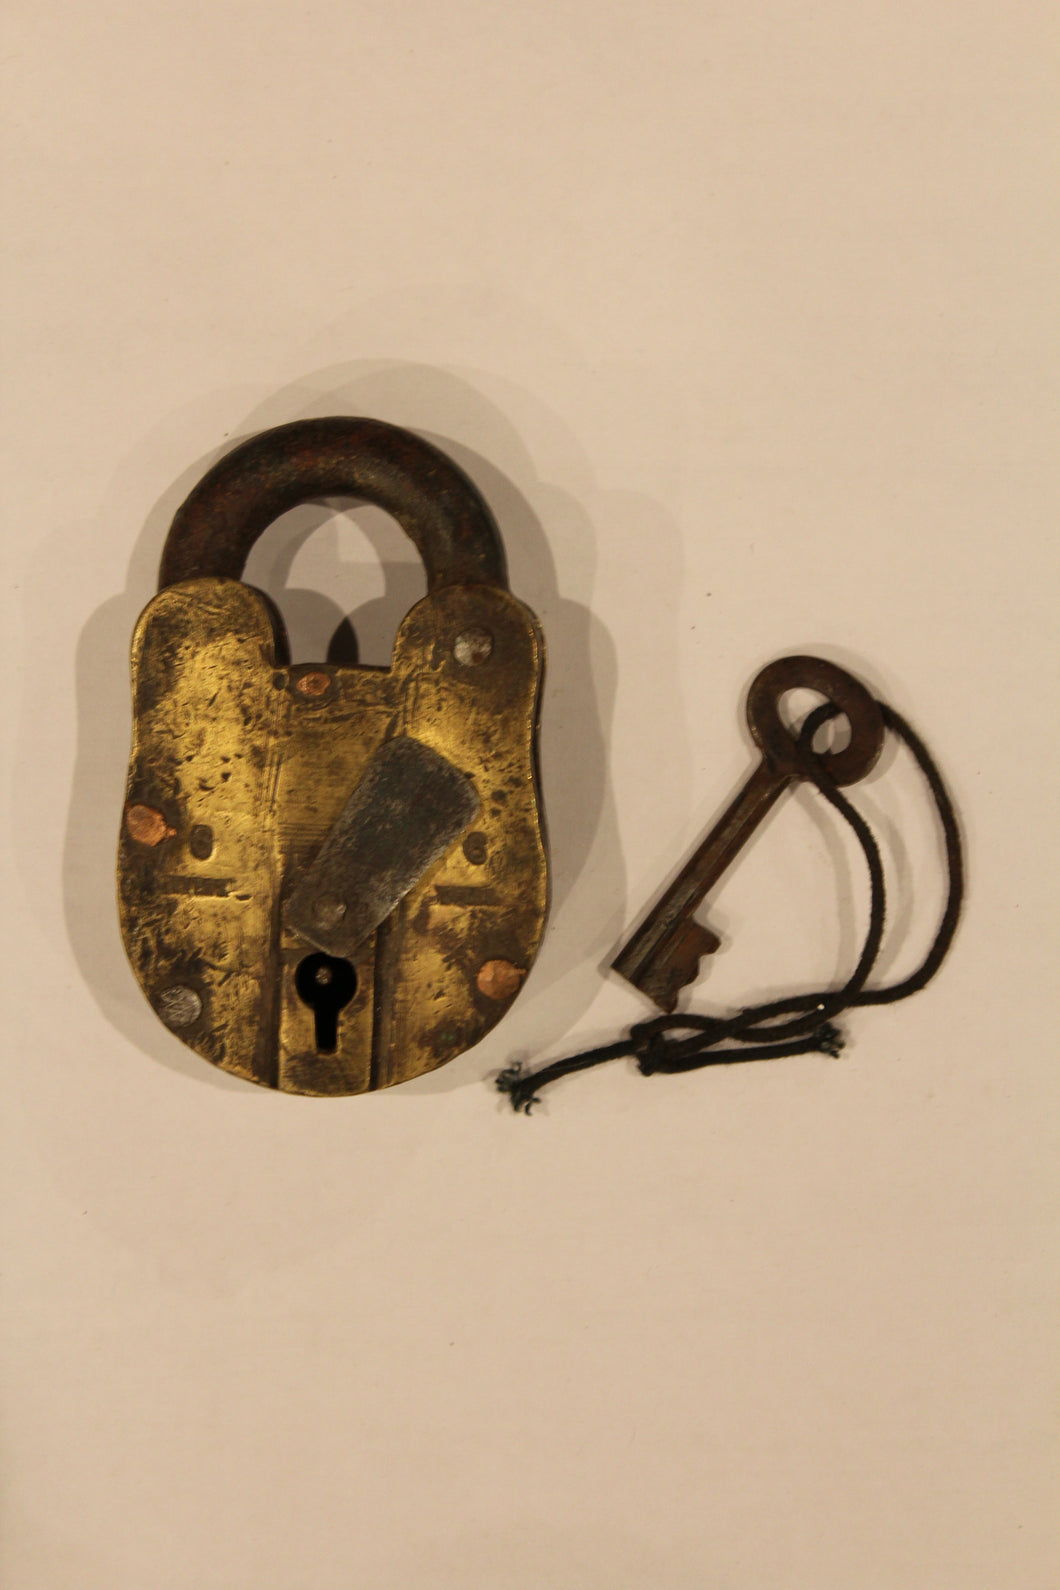 Antique Lock and Key